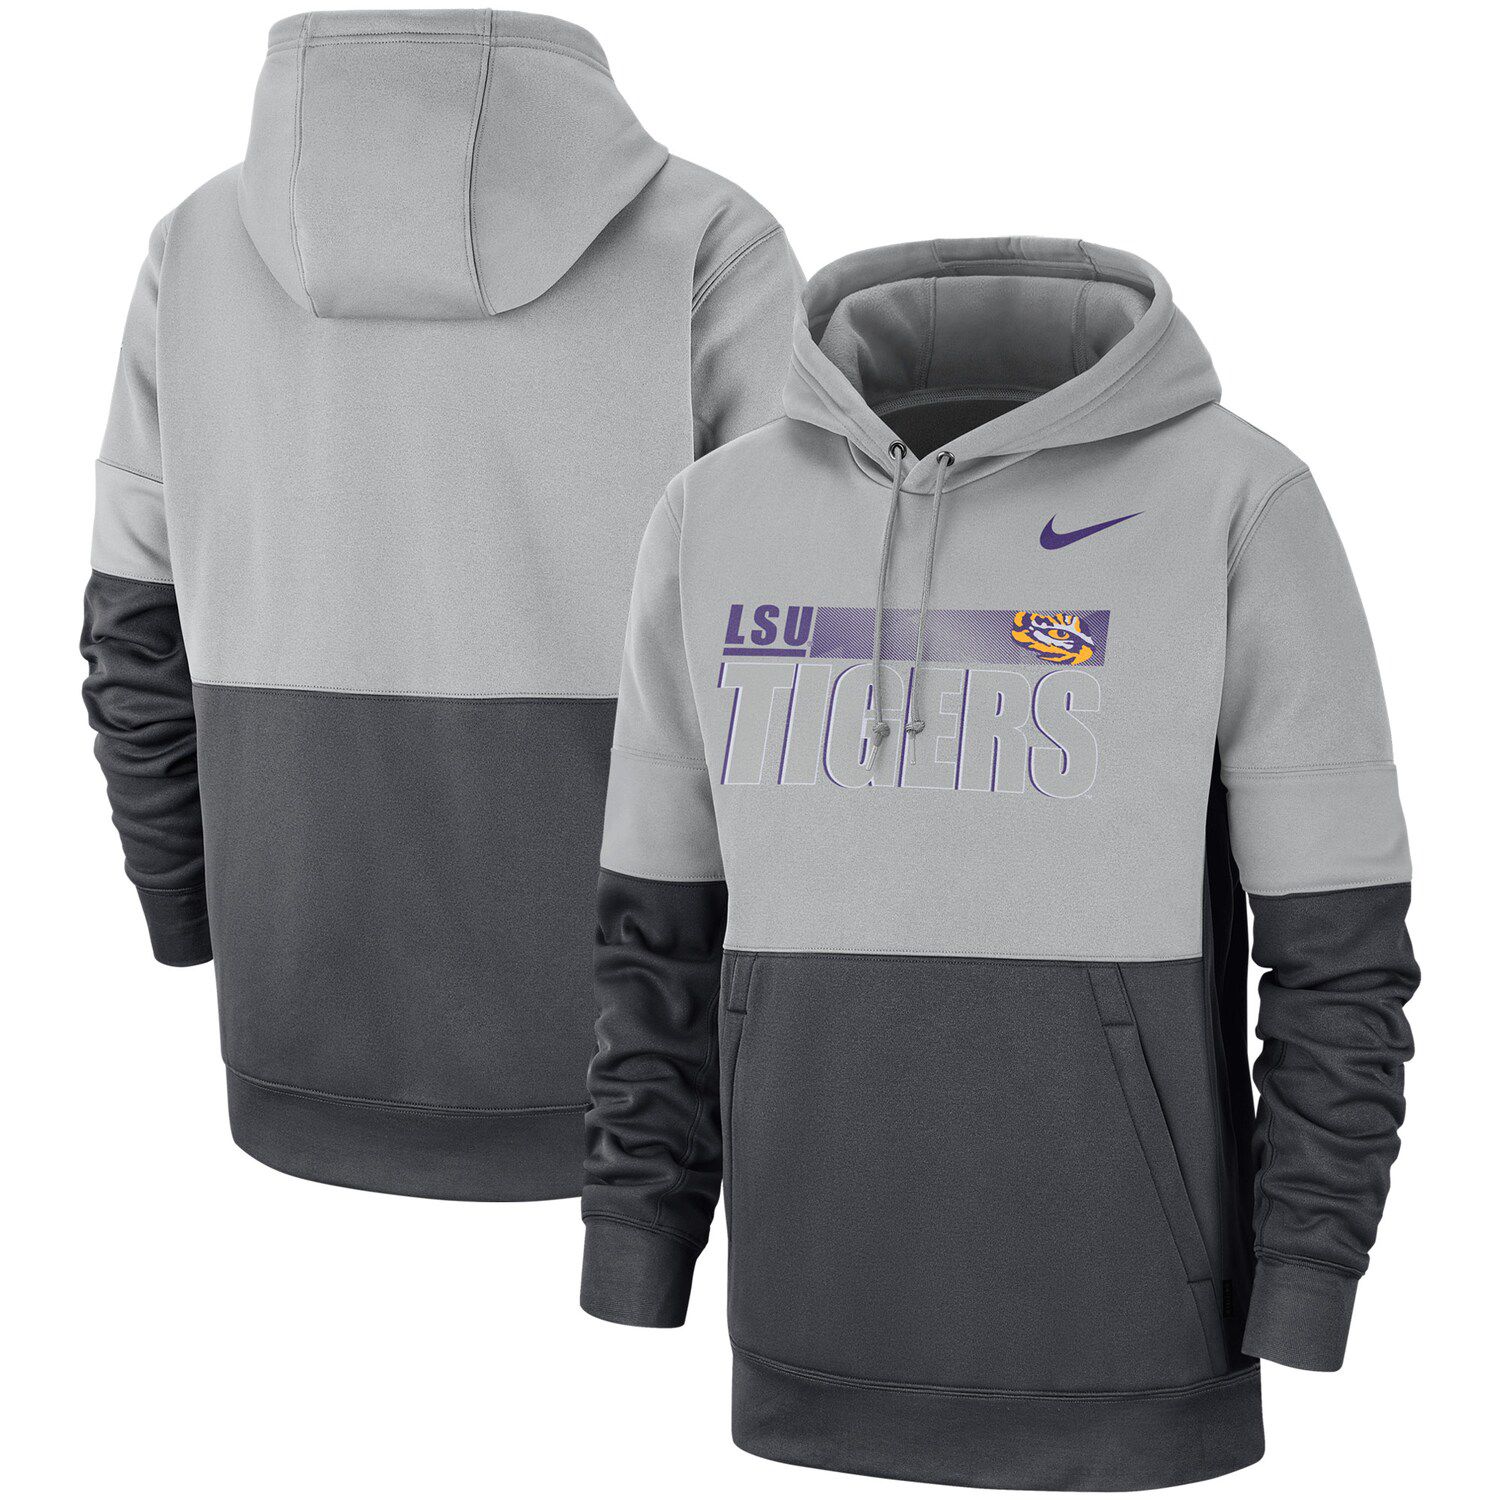 Men's Nike Gray/Anthracite LSU Tigers 